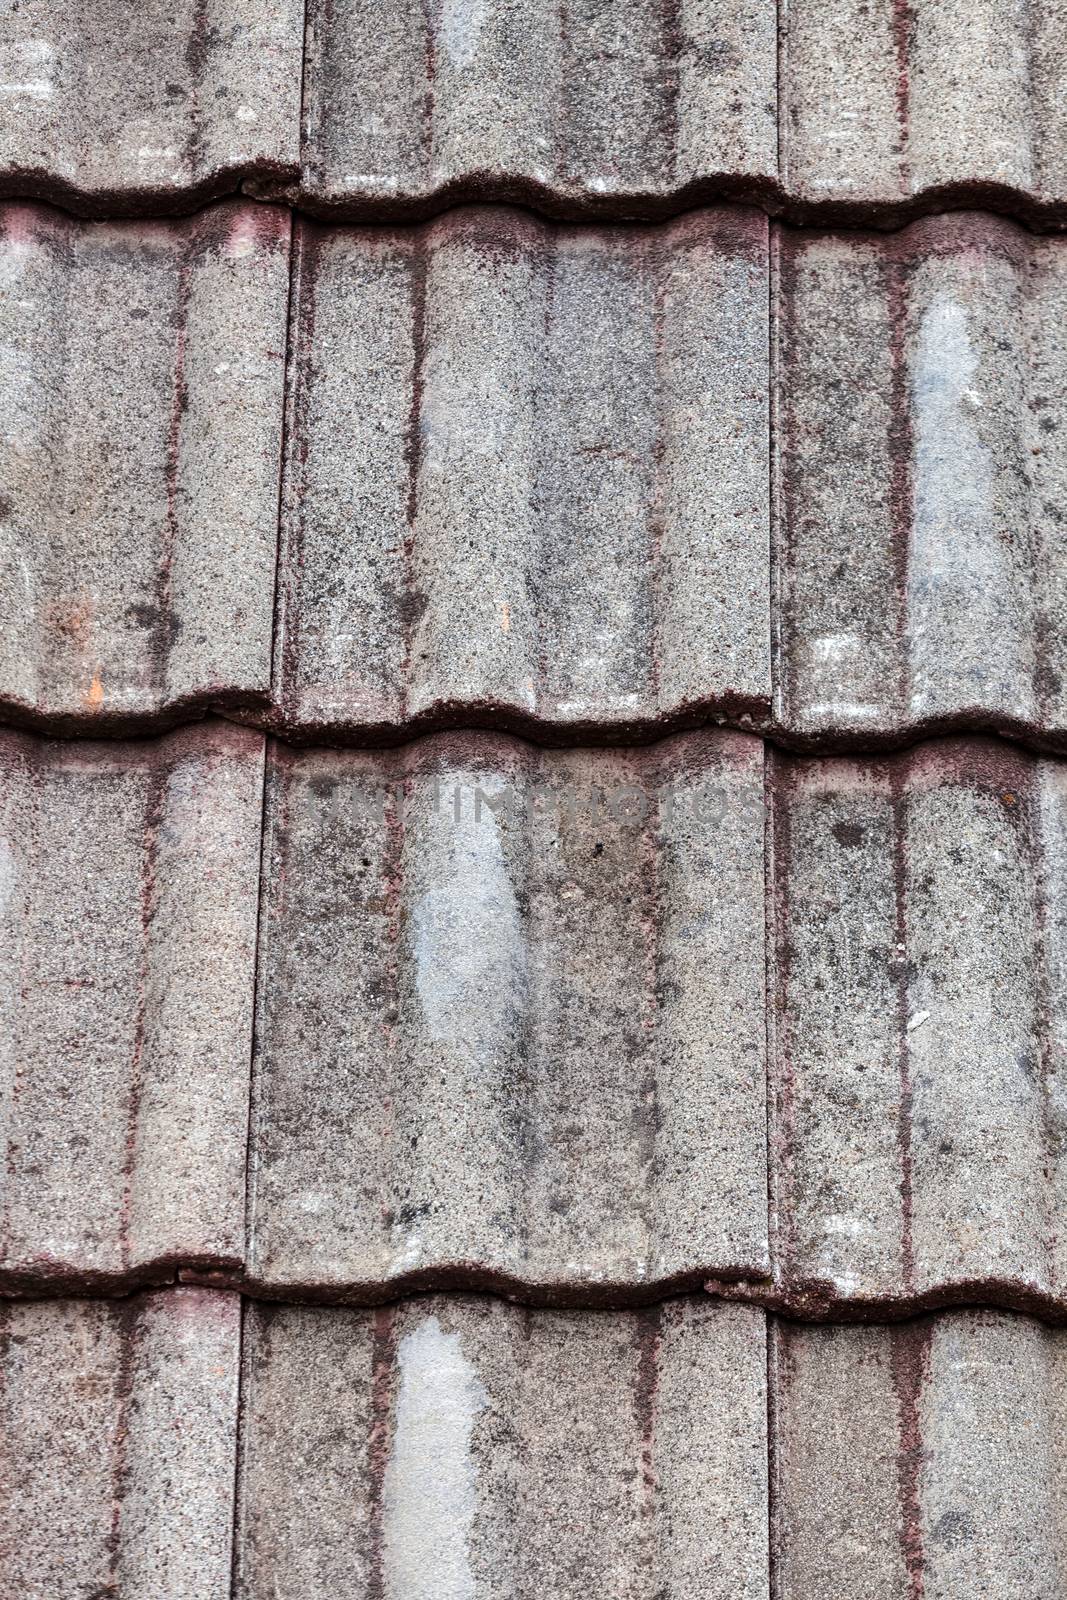 pattern detail of old ceramic roof tiles